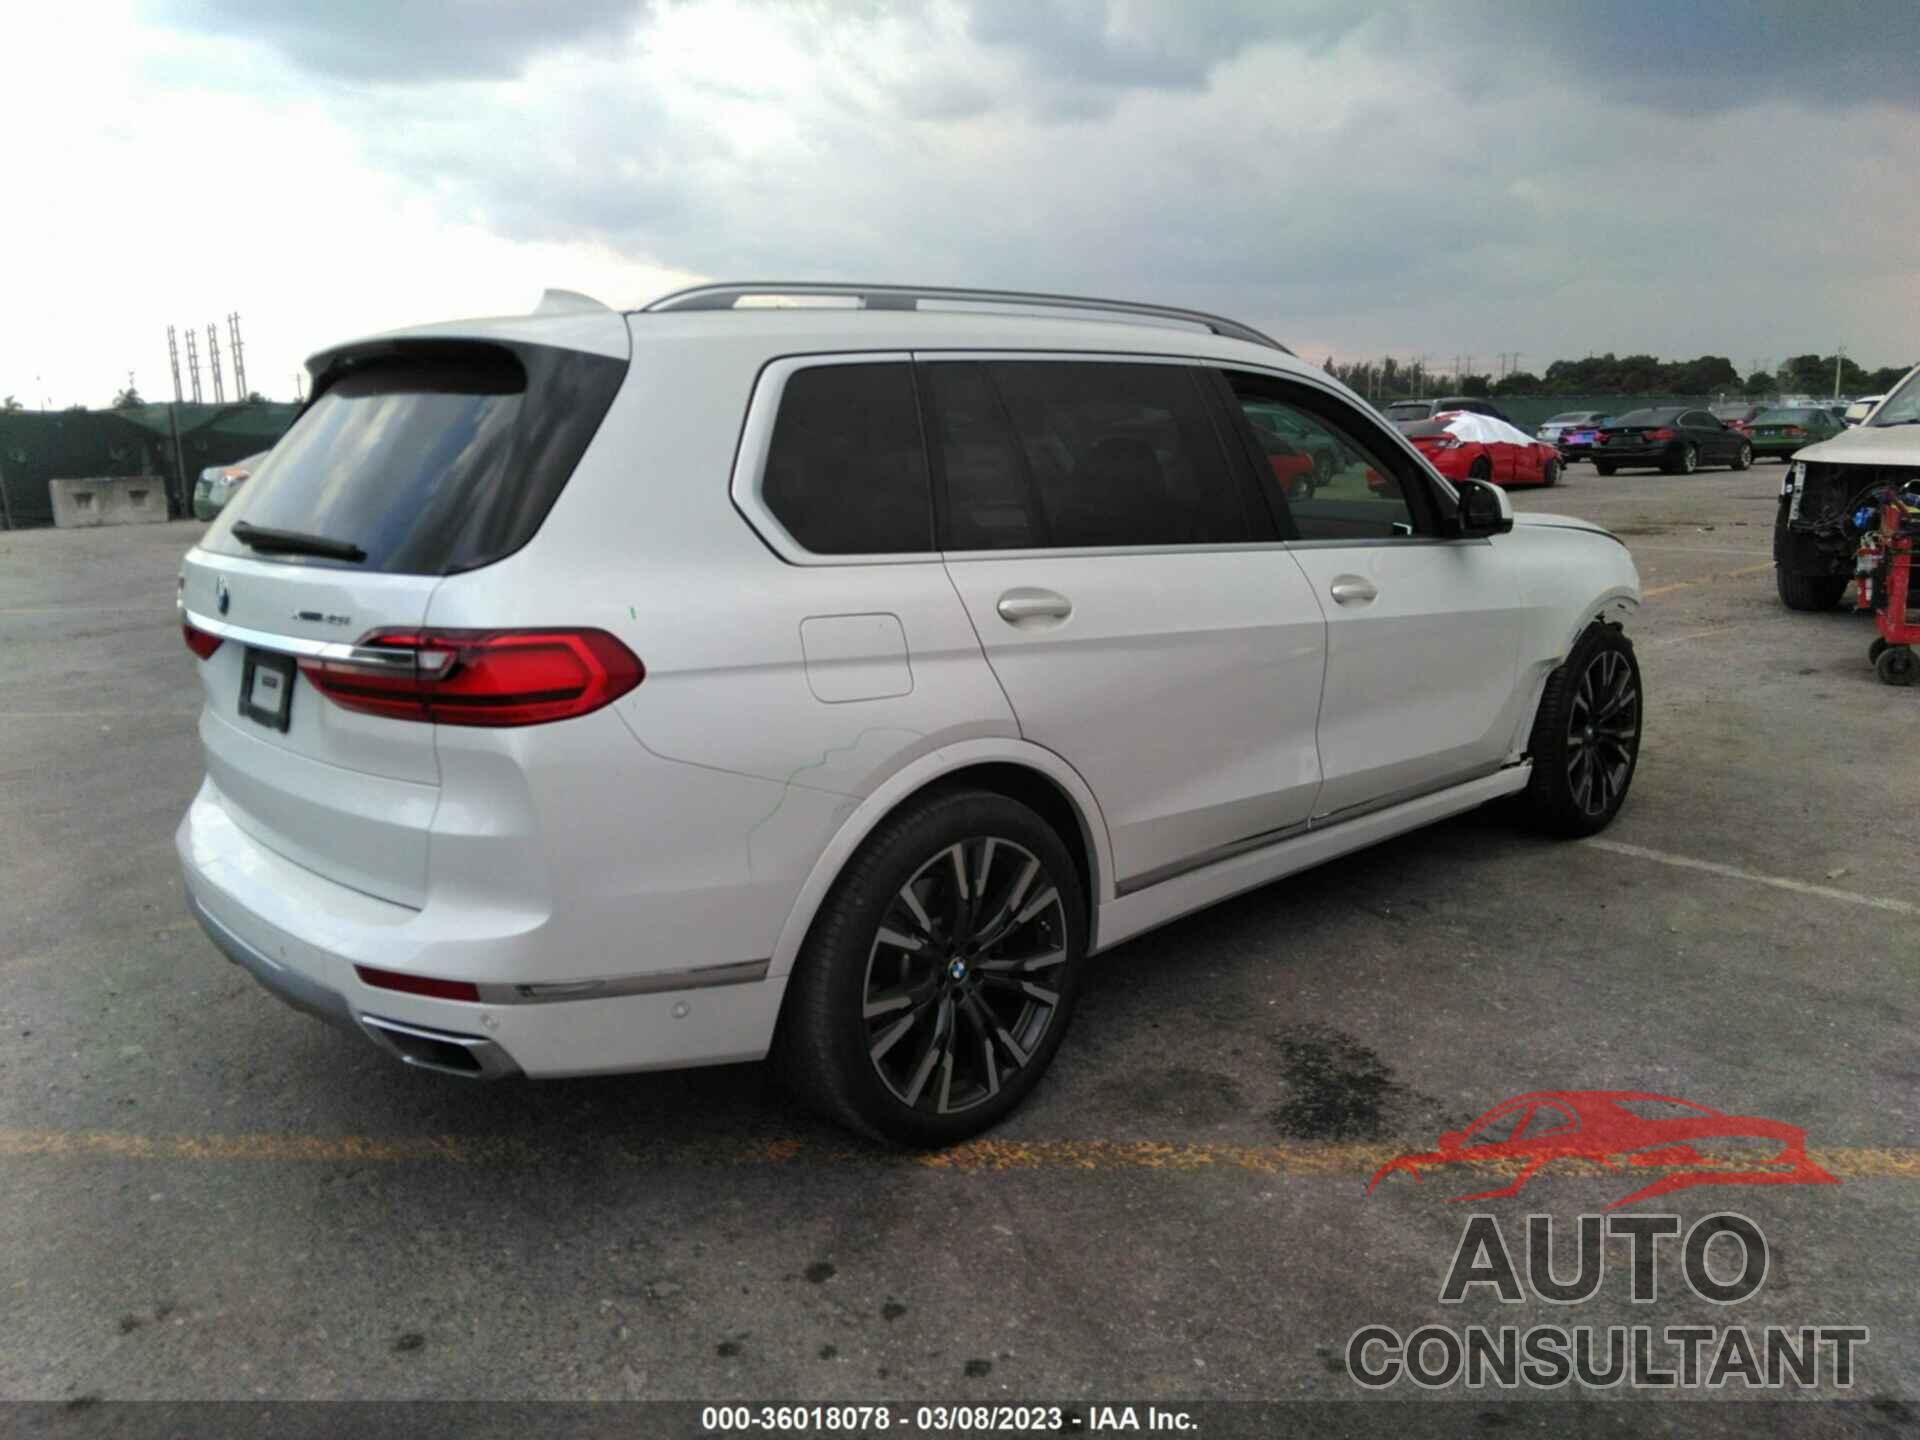 BMW X7 2020 - 5UXCW2C08L9B56999